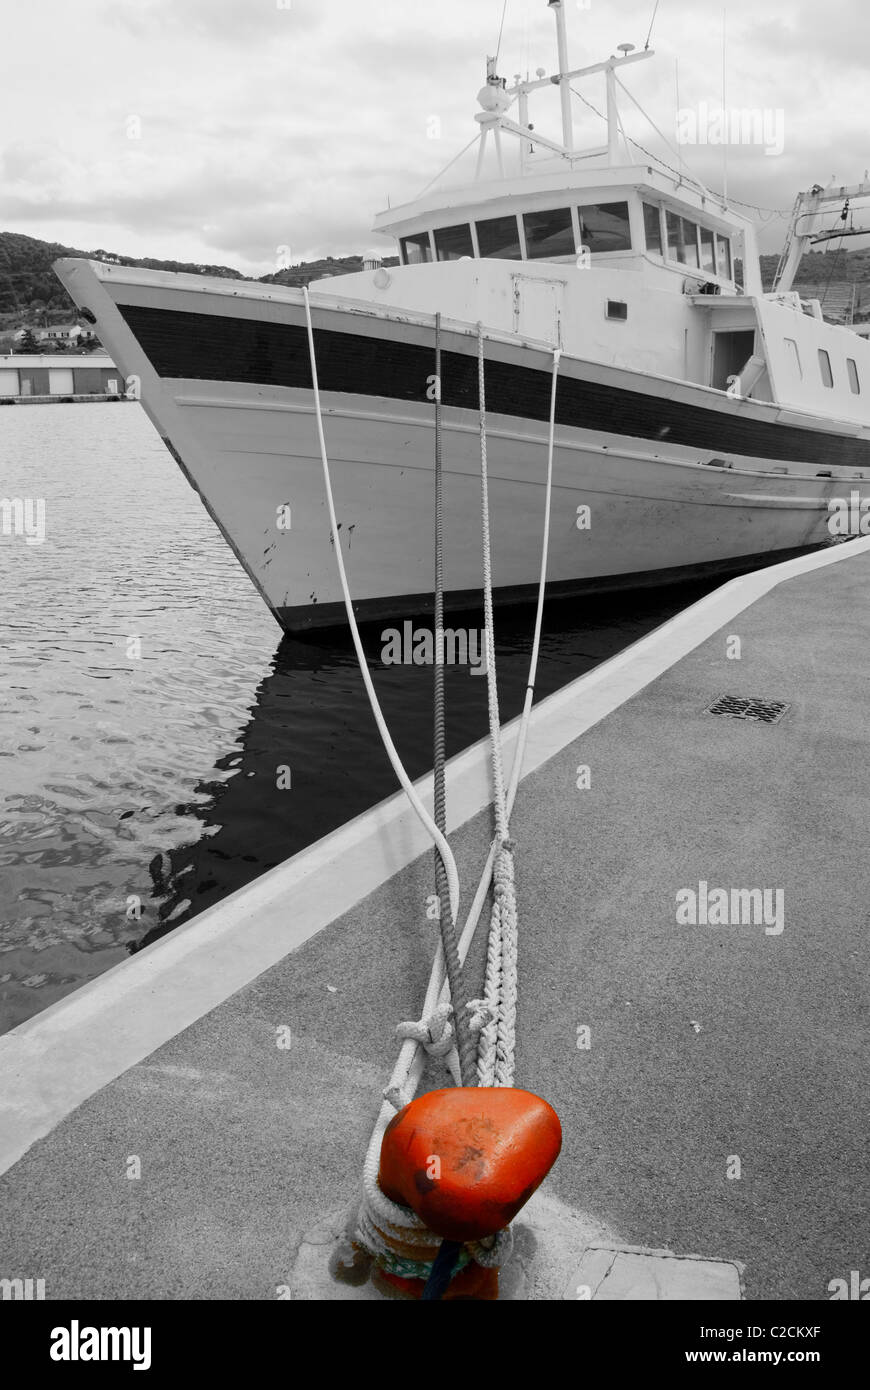 Angelboote/Fischerboote in Arenys, el Maresme, Barcelona, Spanien Stockfoto